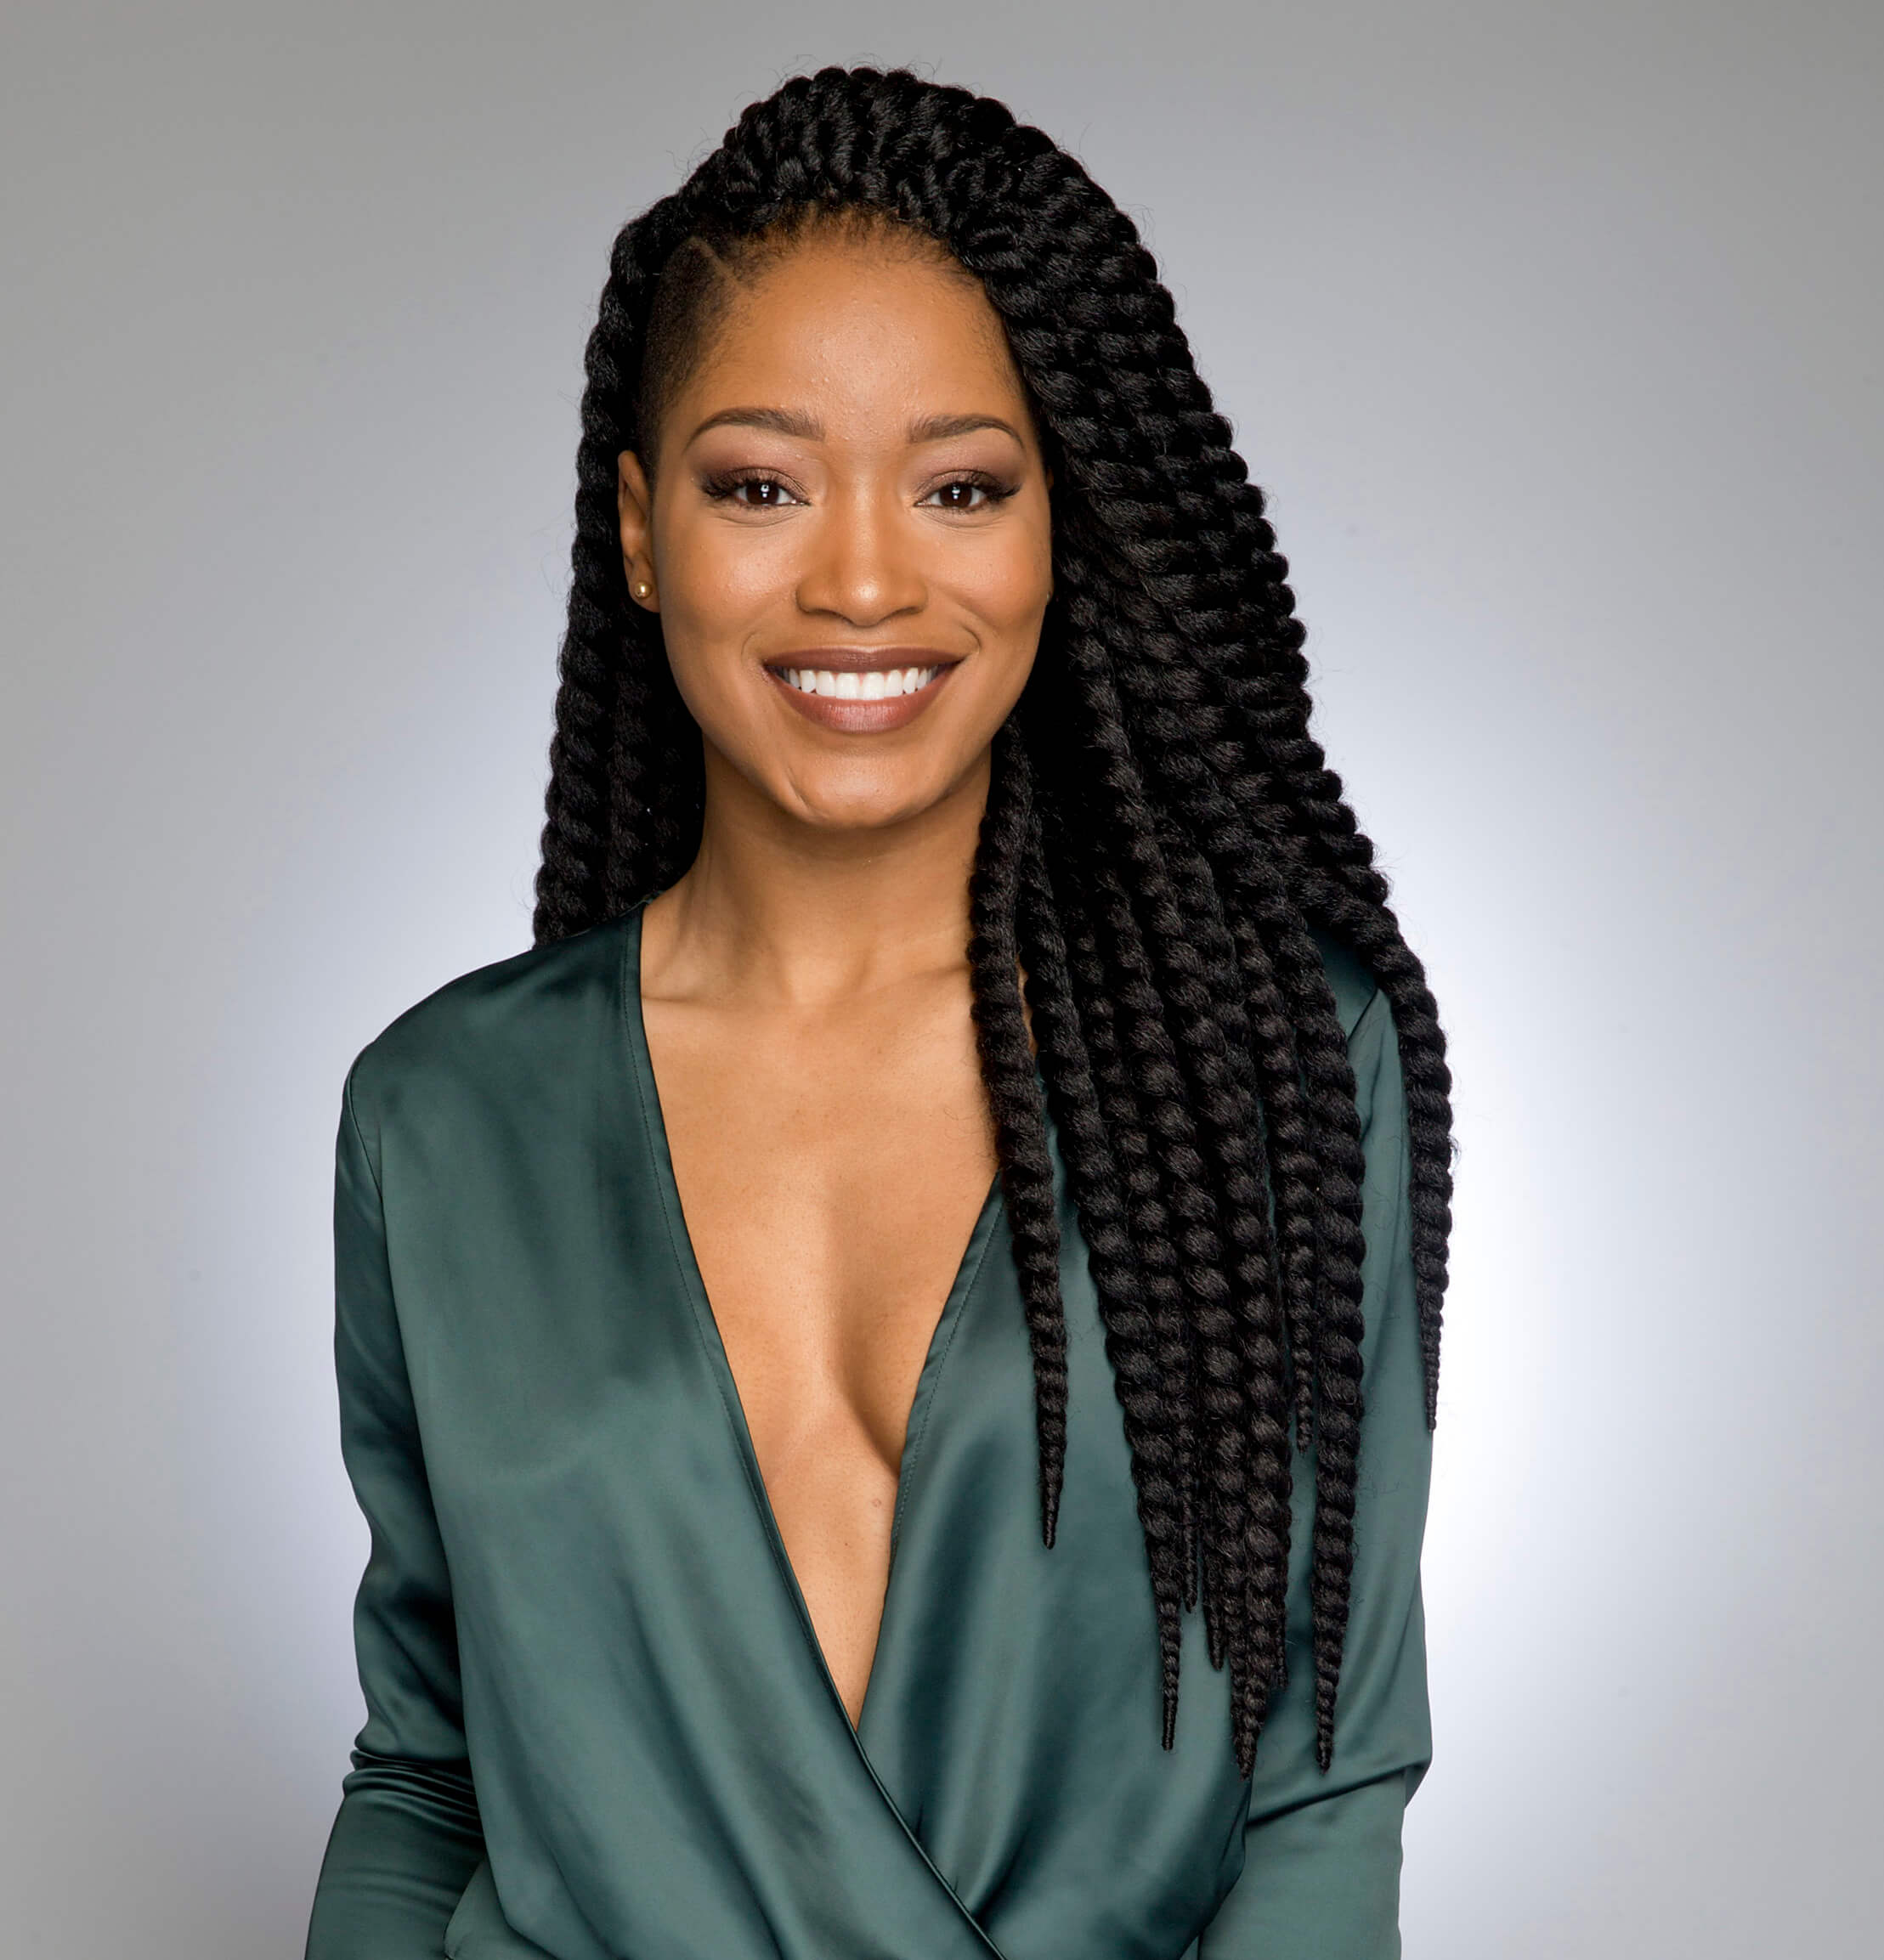 black female actresses under 40